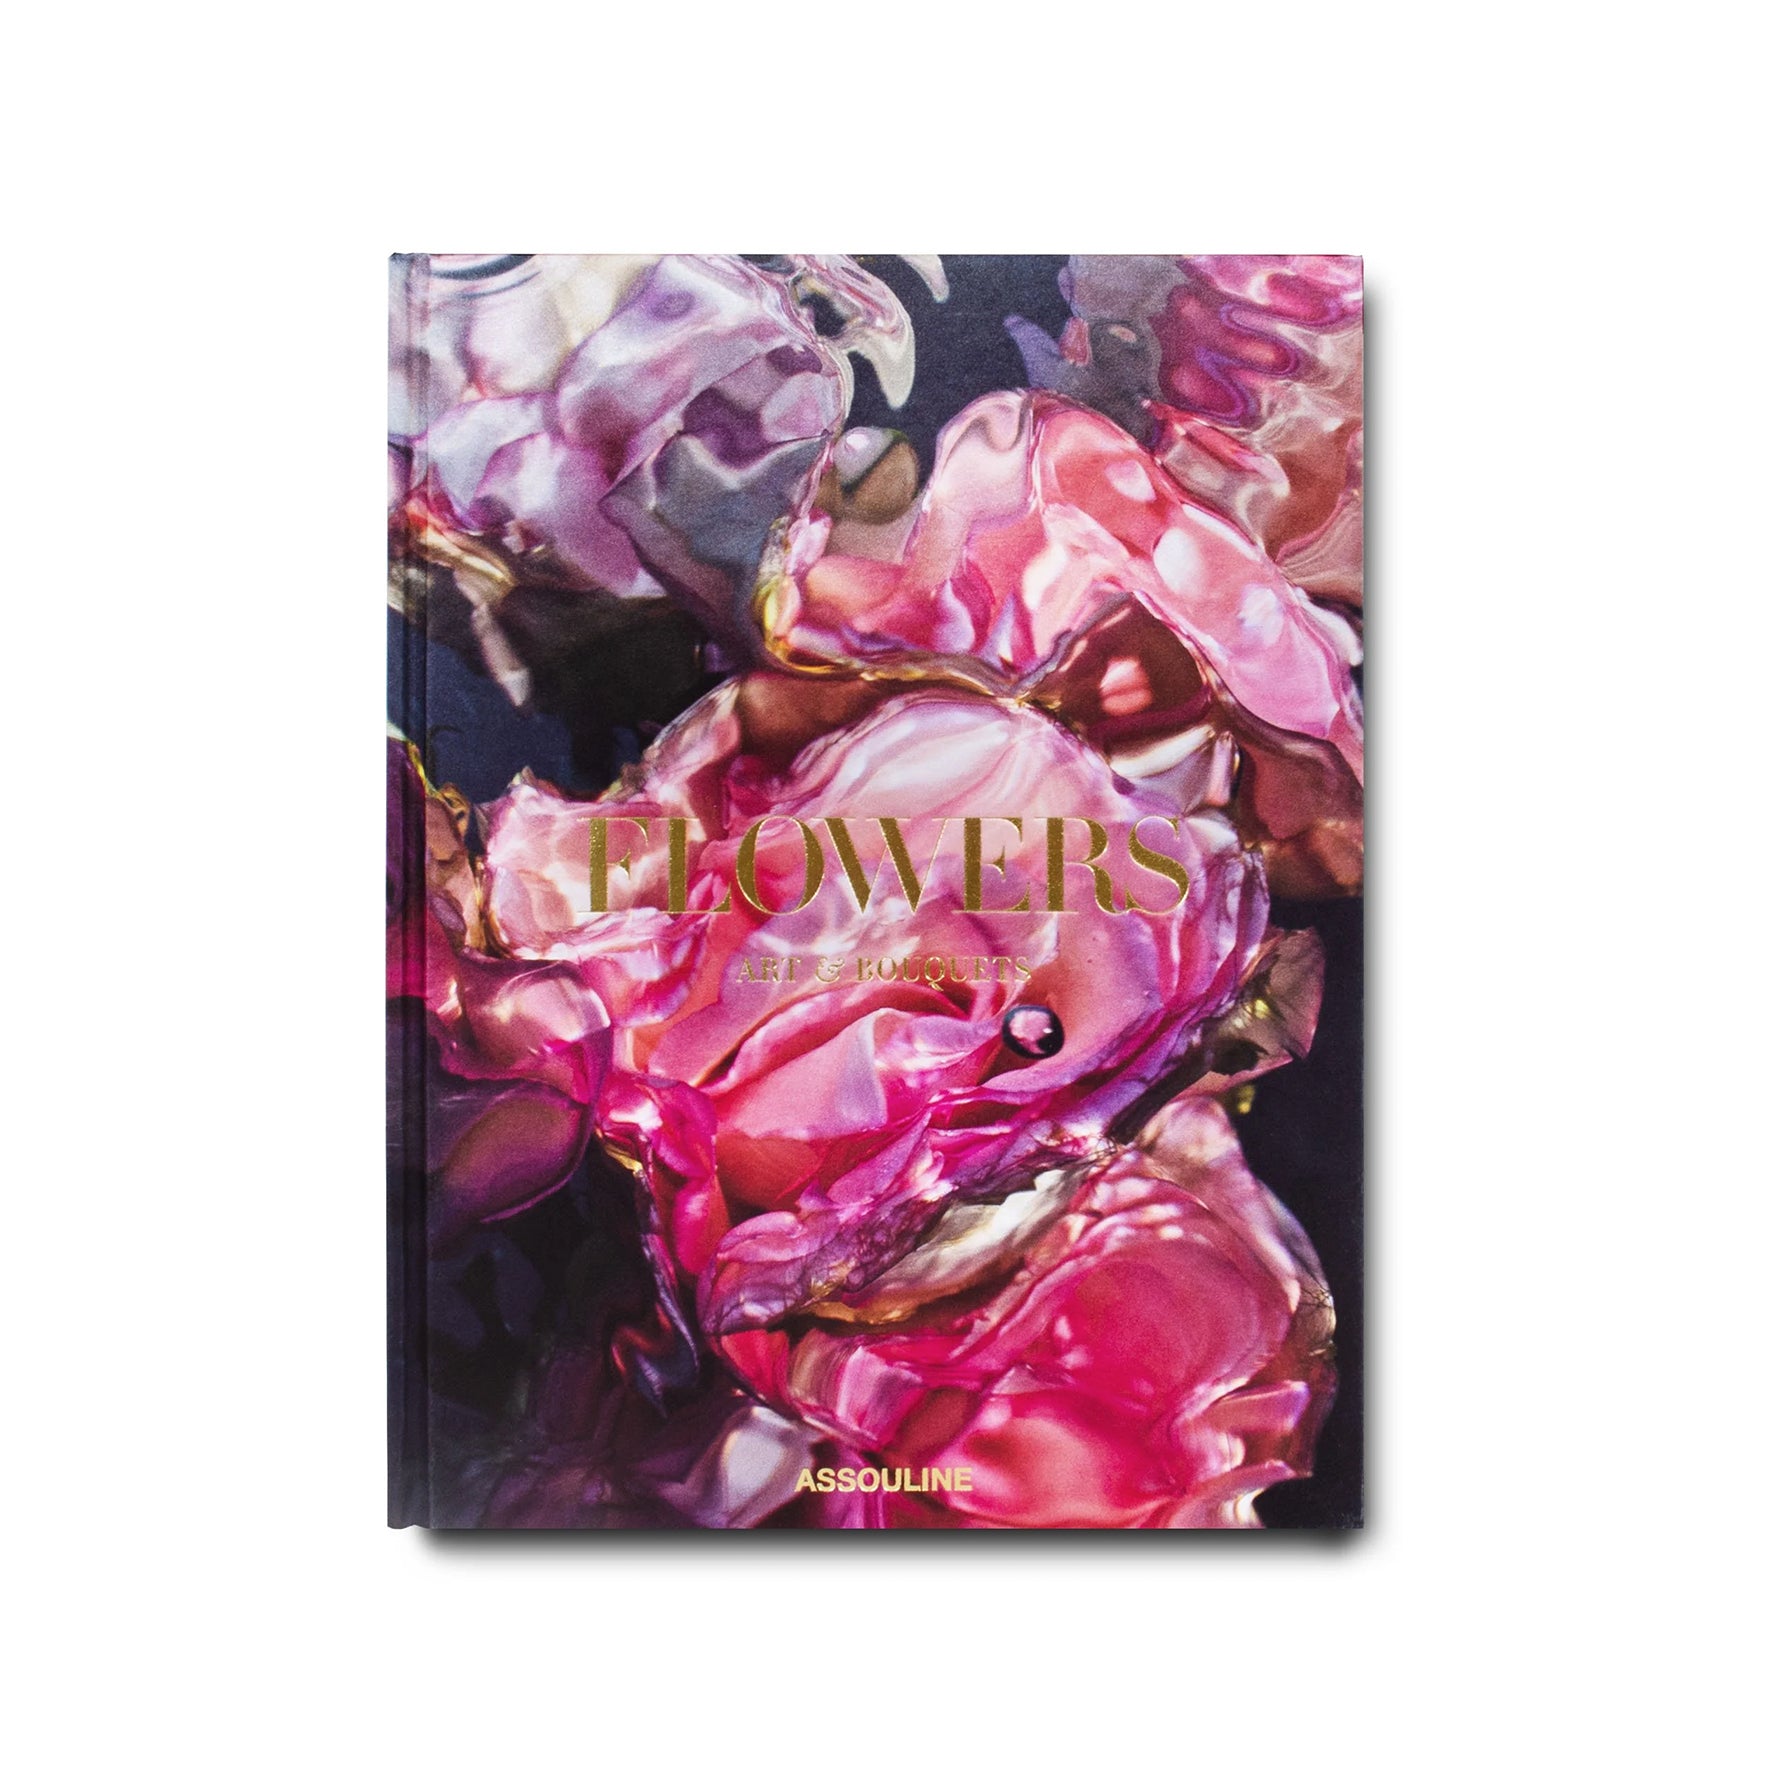 Flowers: Art & Bouquets by Assouline